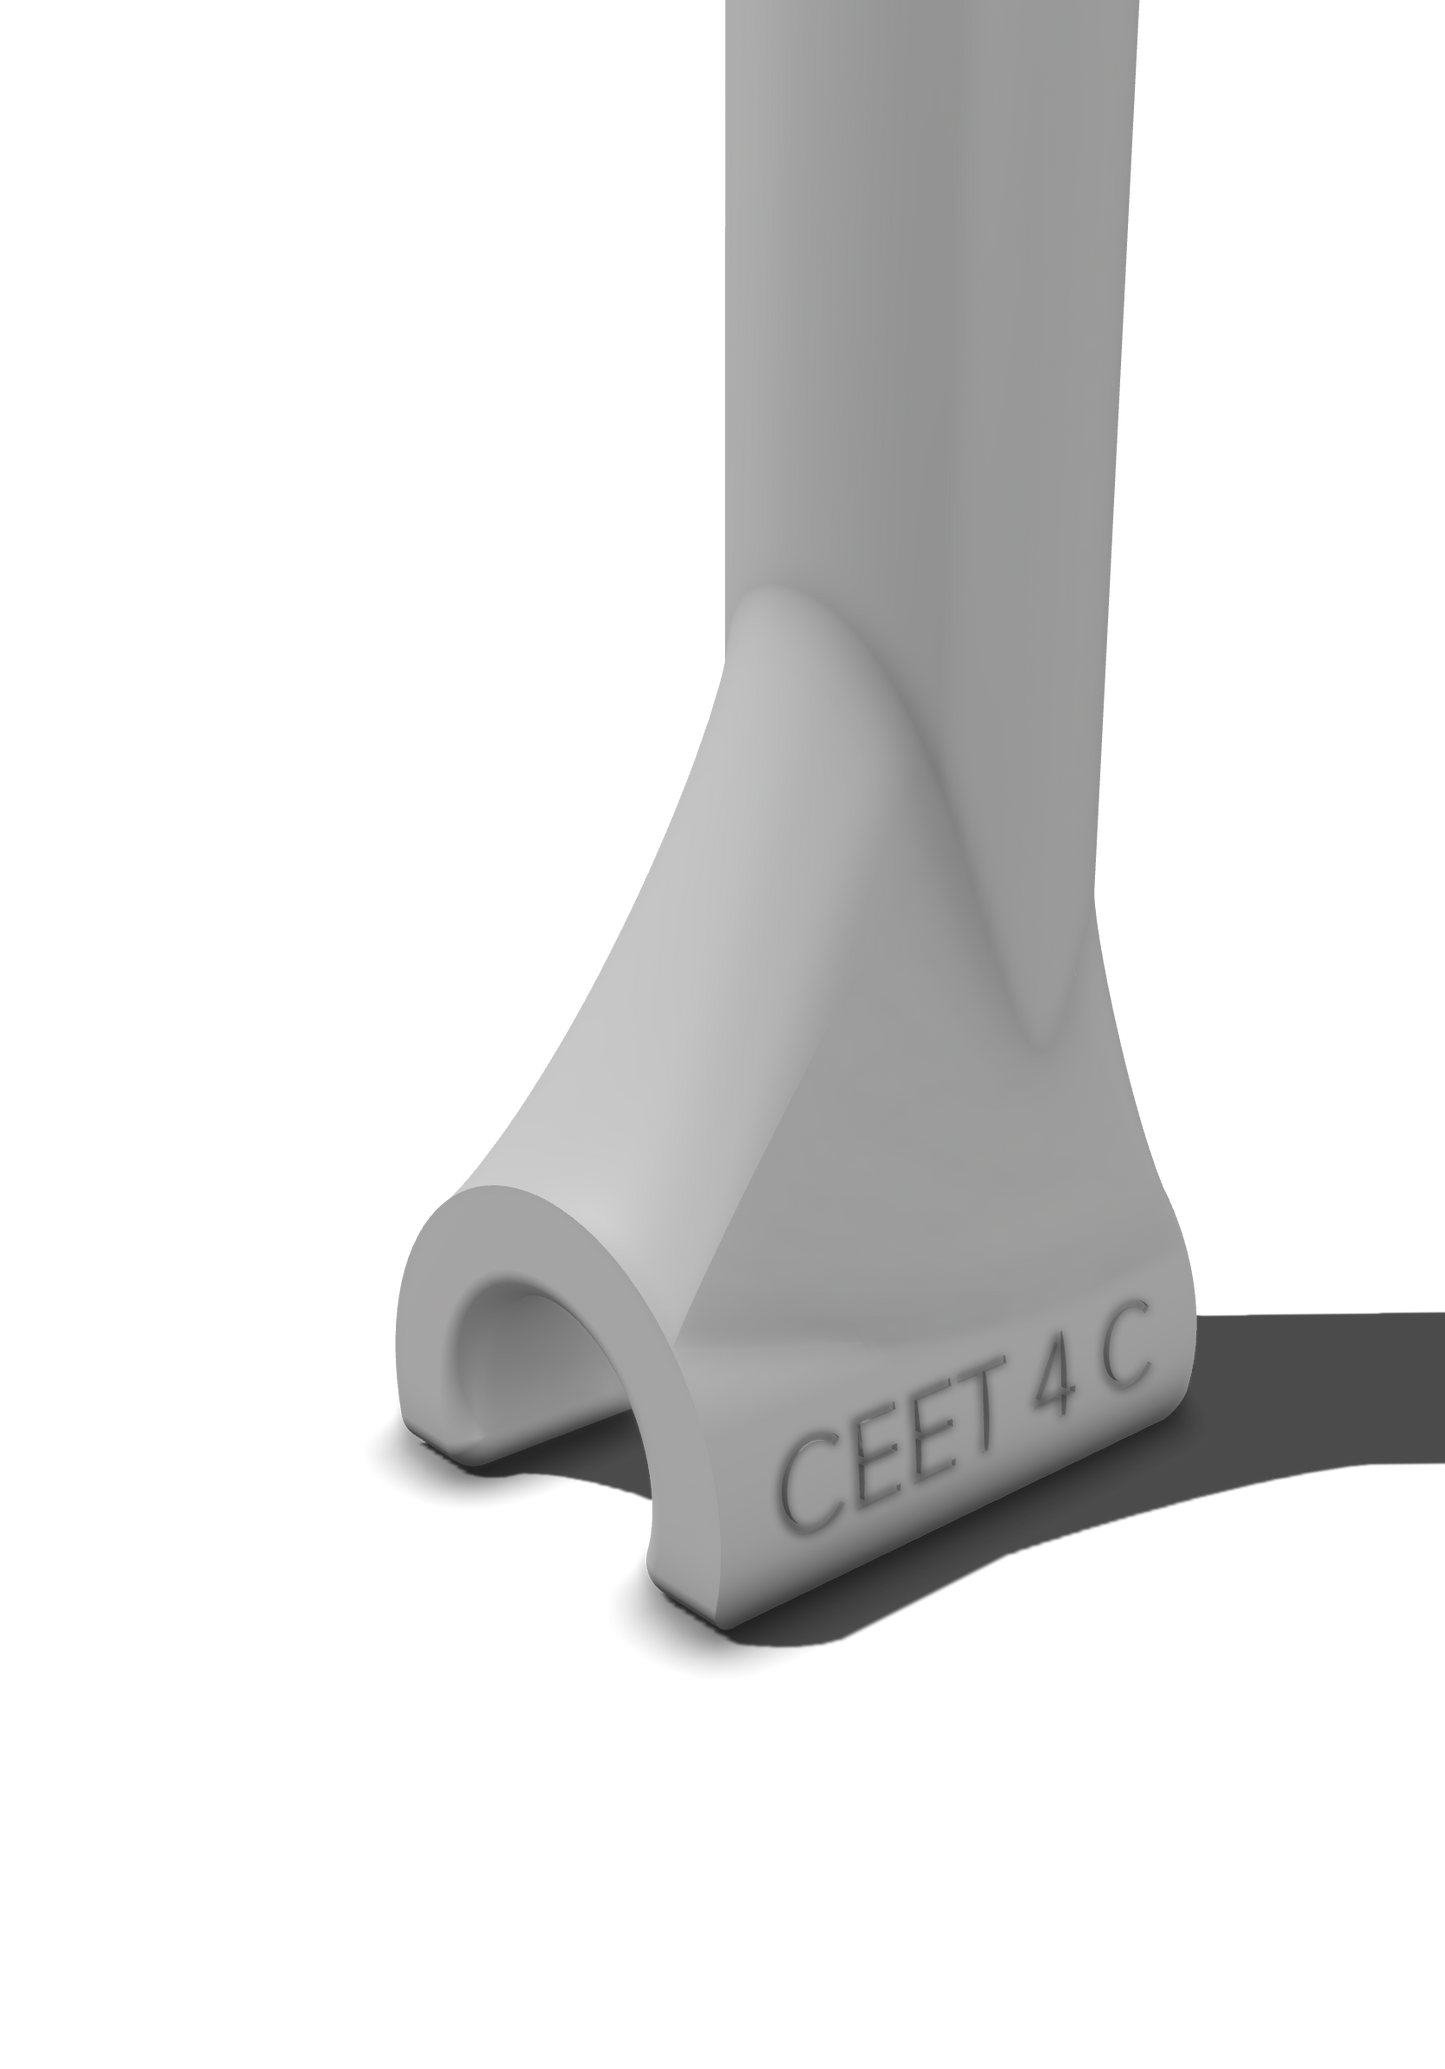 CEET - The C-Stand Seat